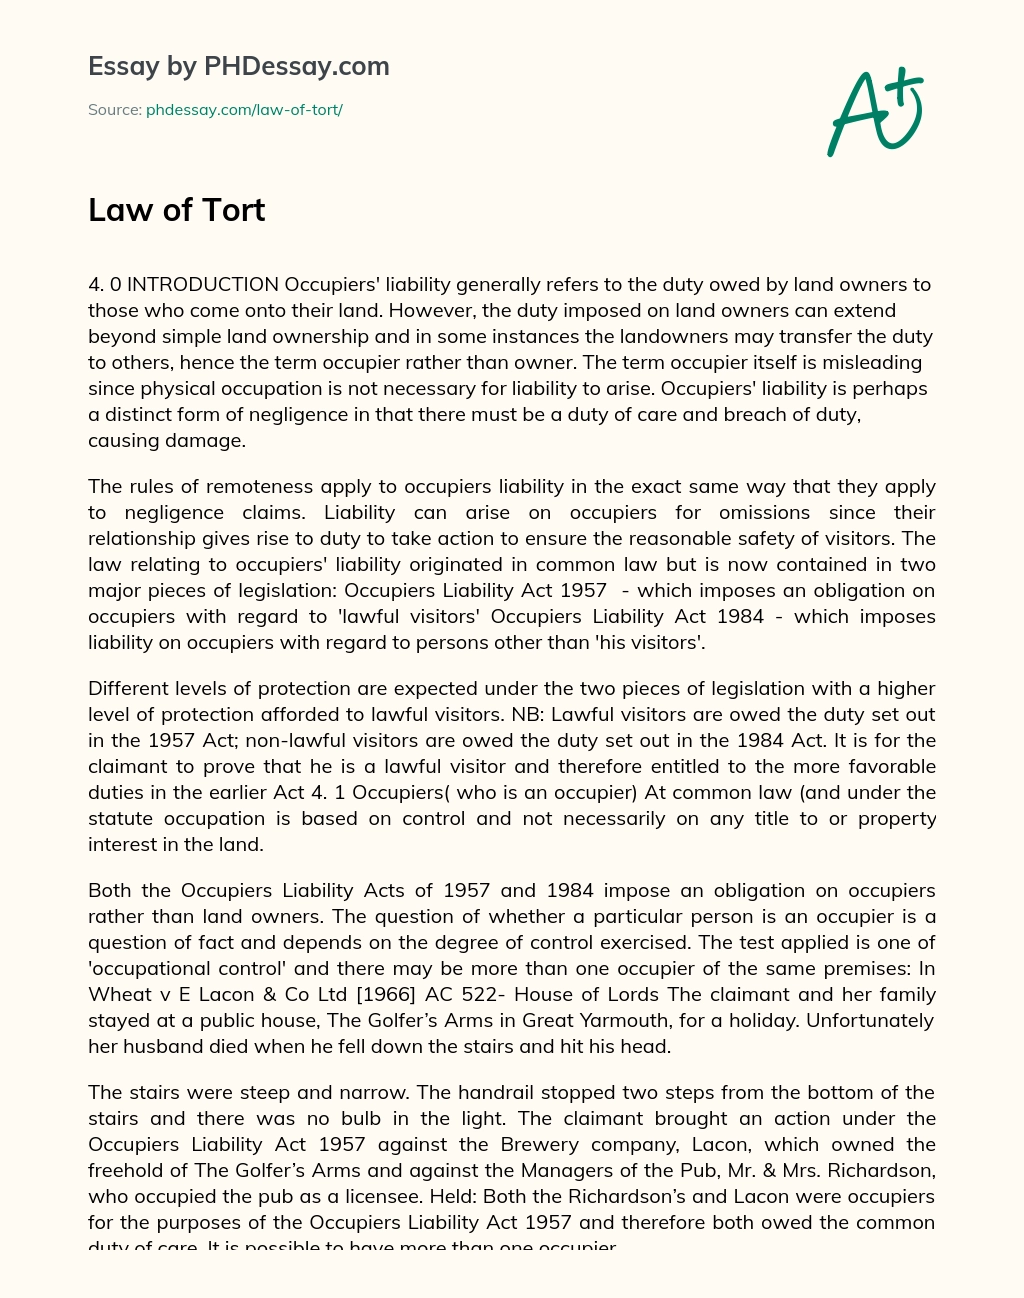 Law of Tort essay